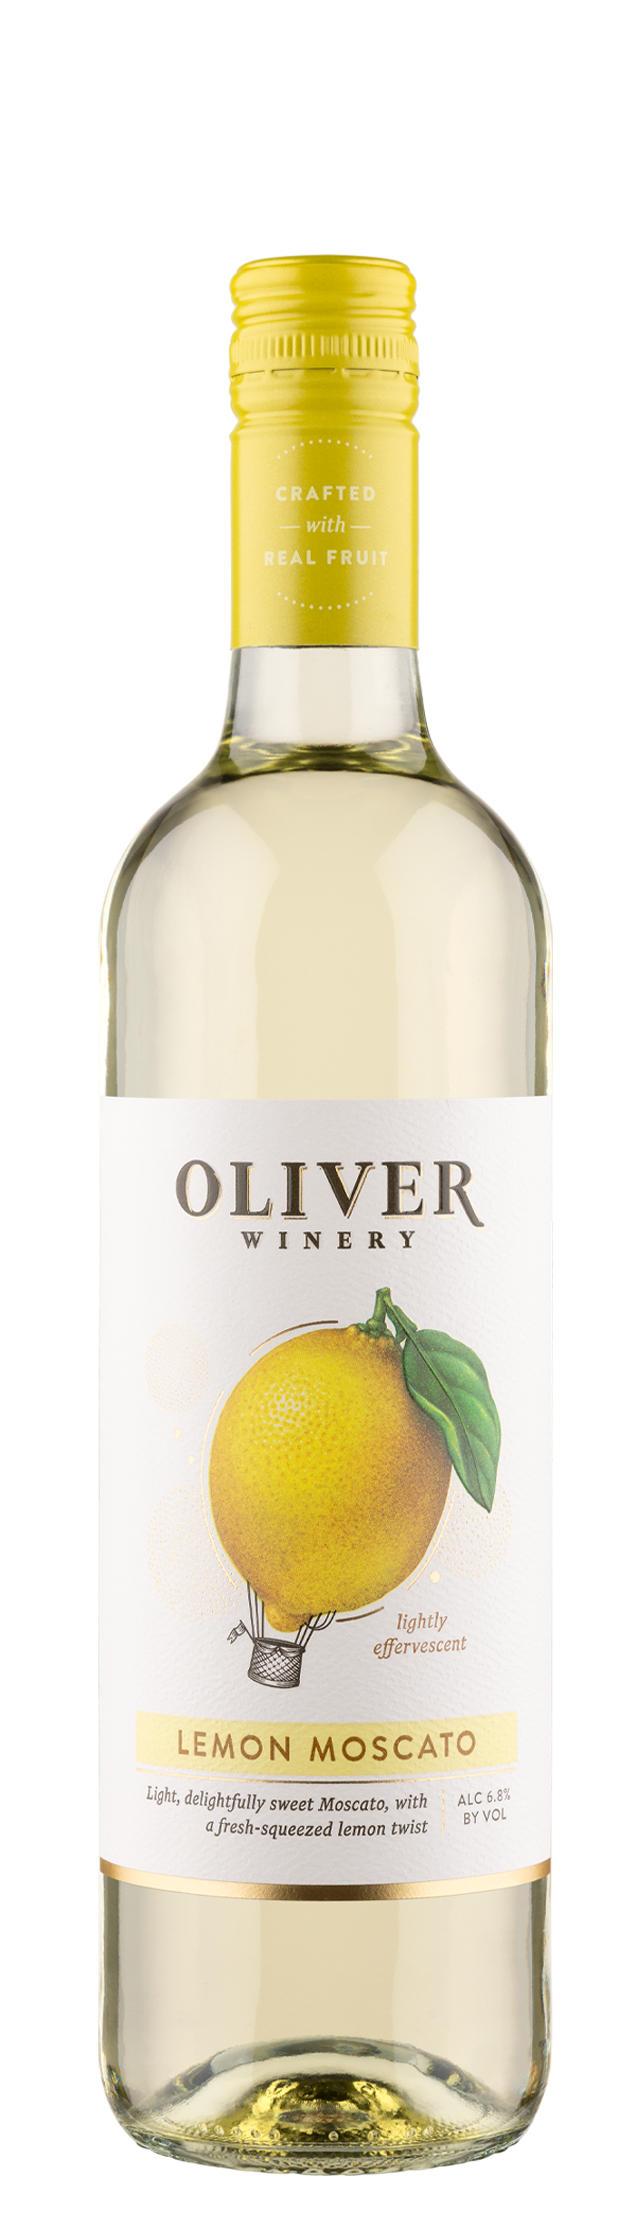 Oliver Winery Vine Series Lemon Moscato Wine